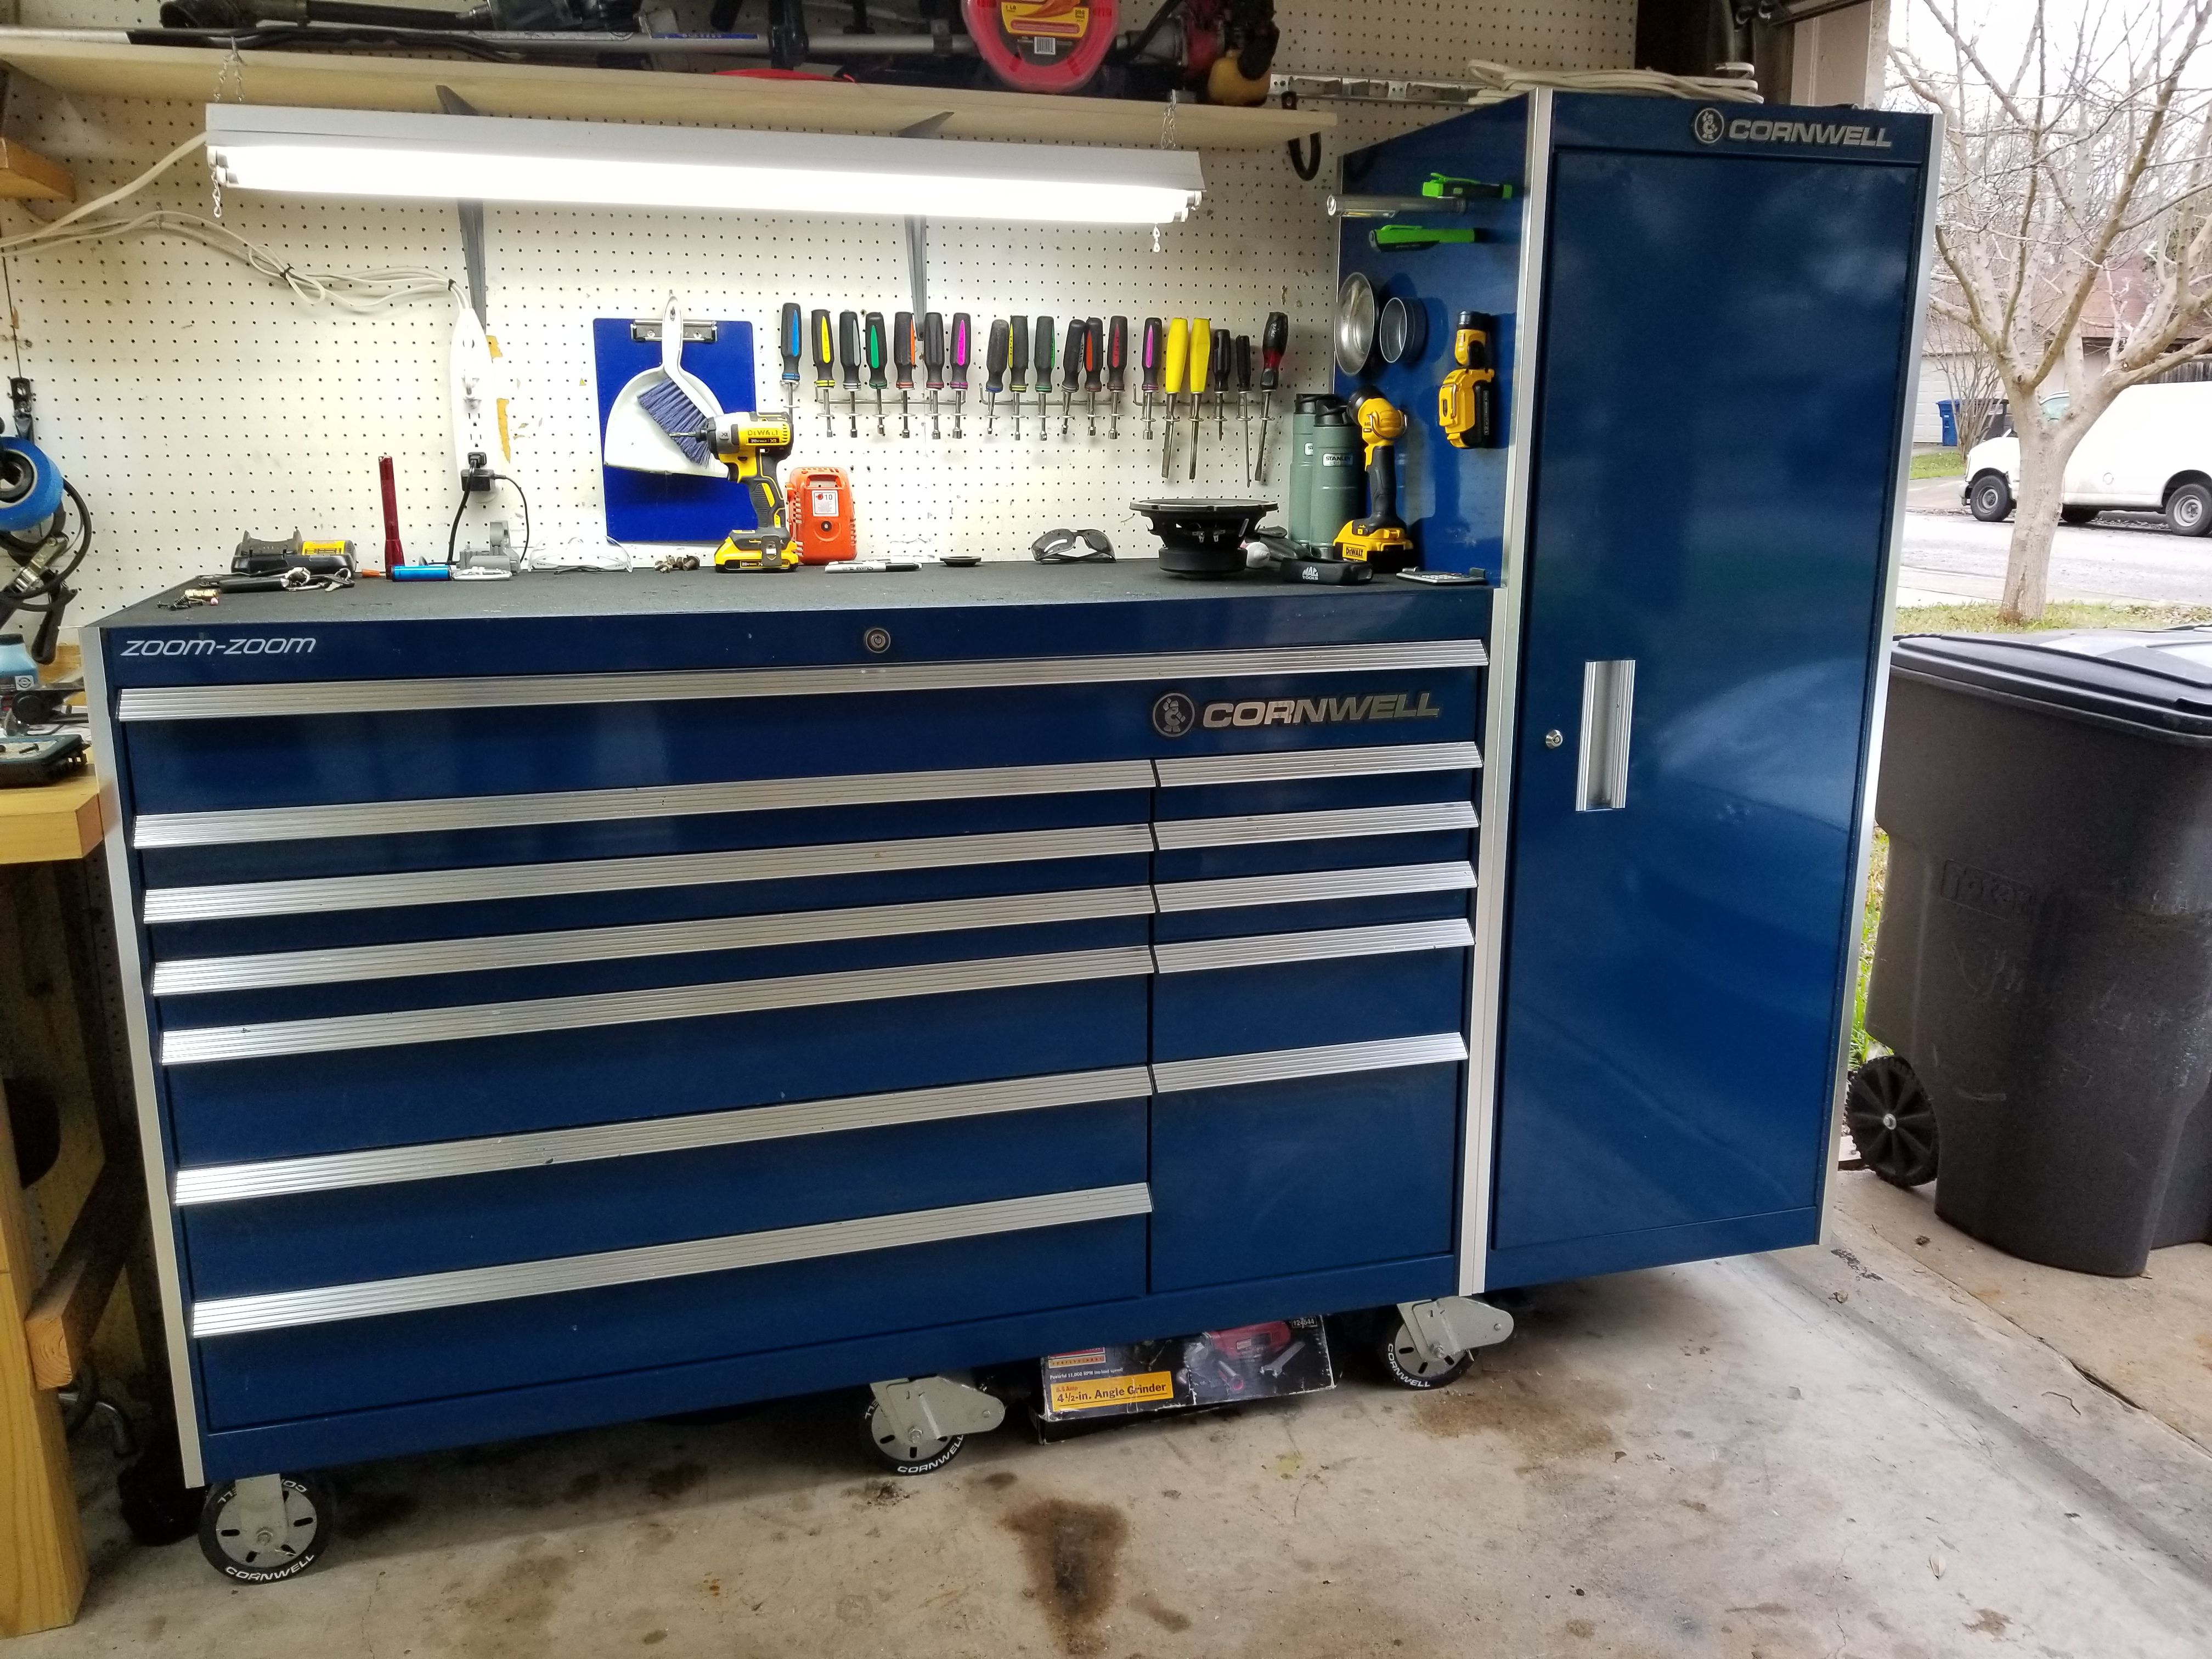 Cornwell tool box and locker